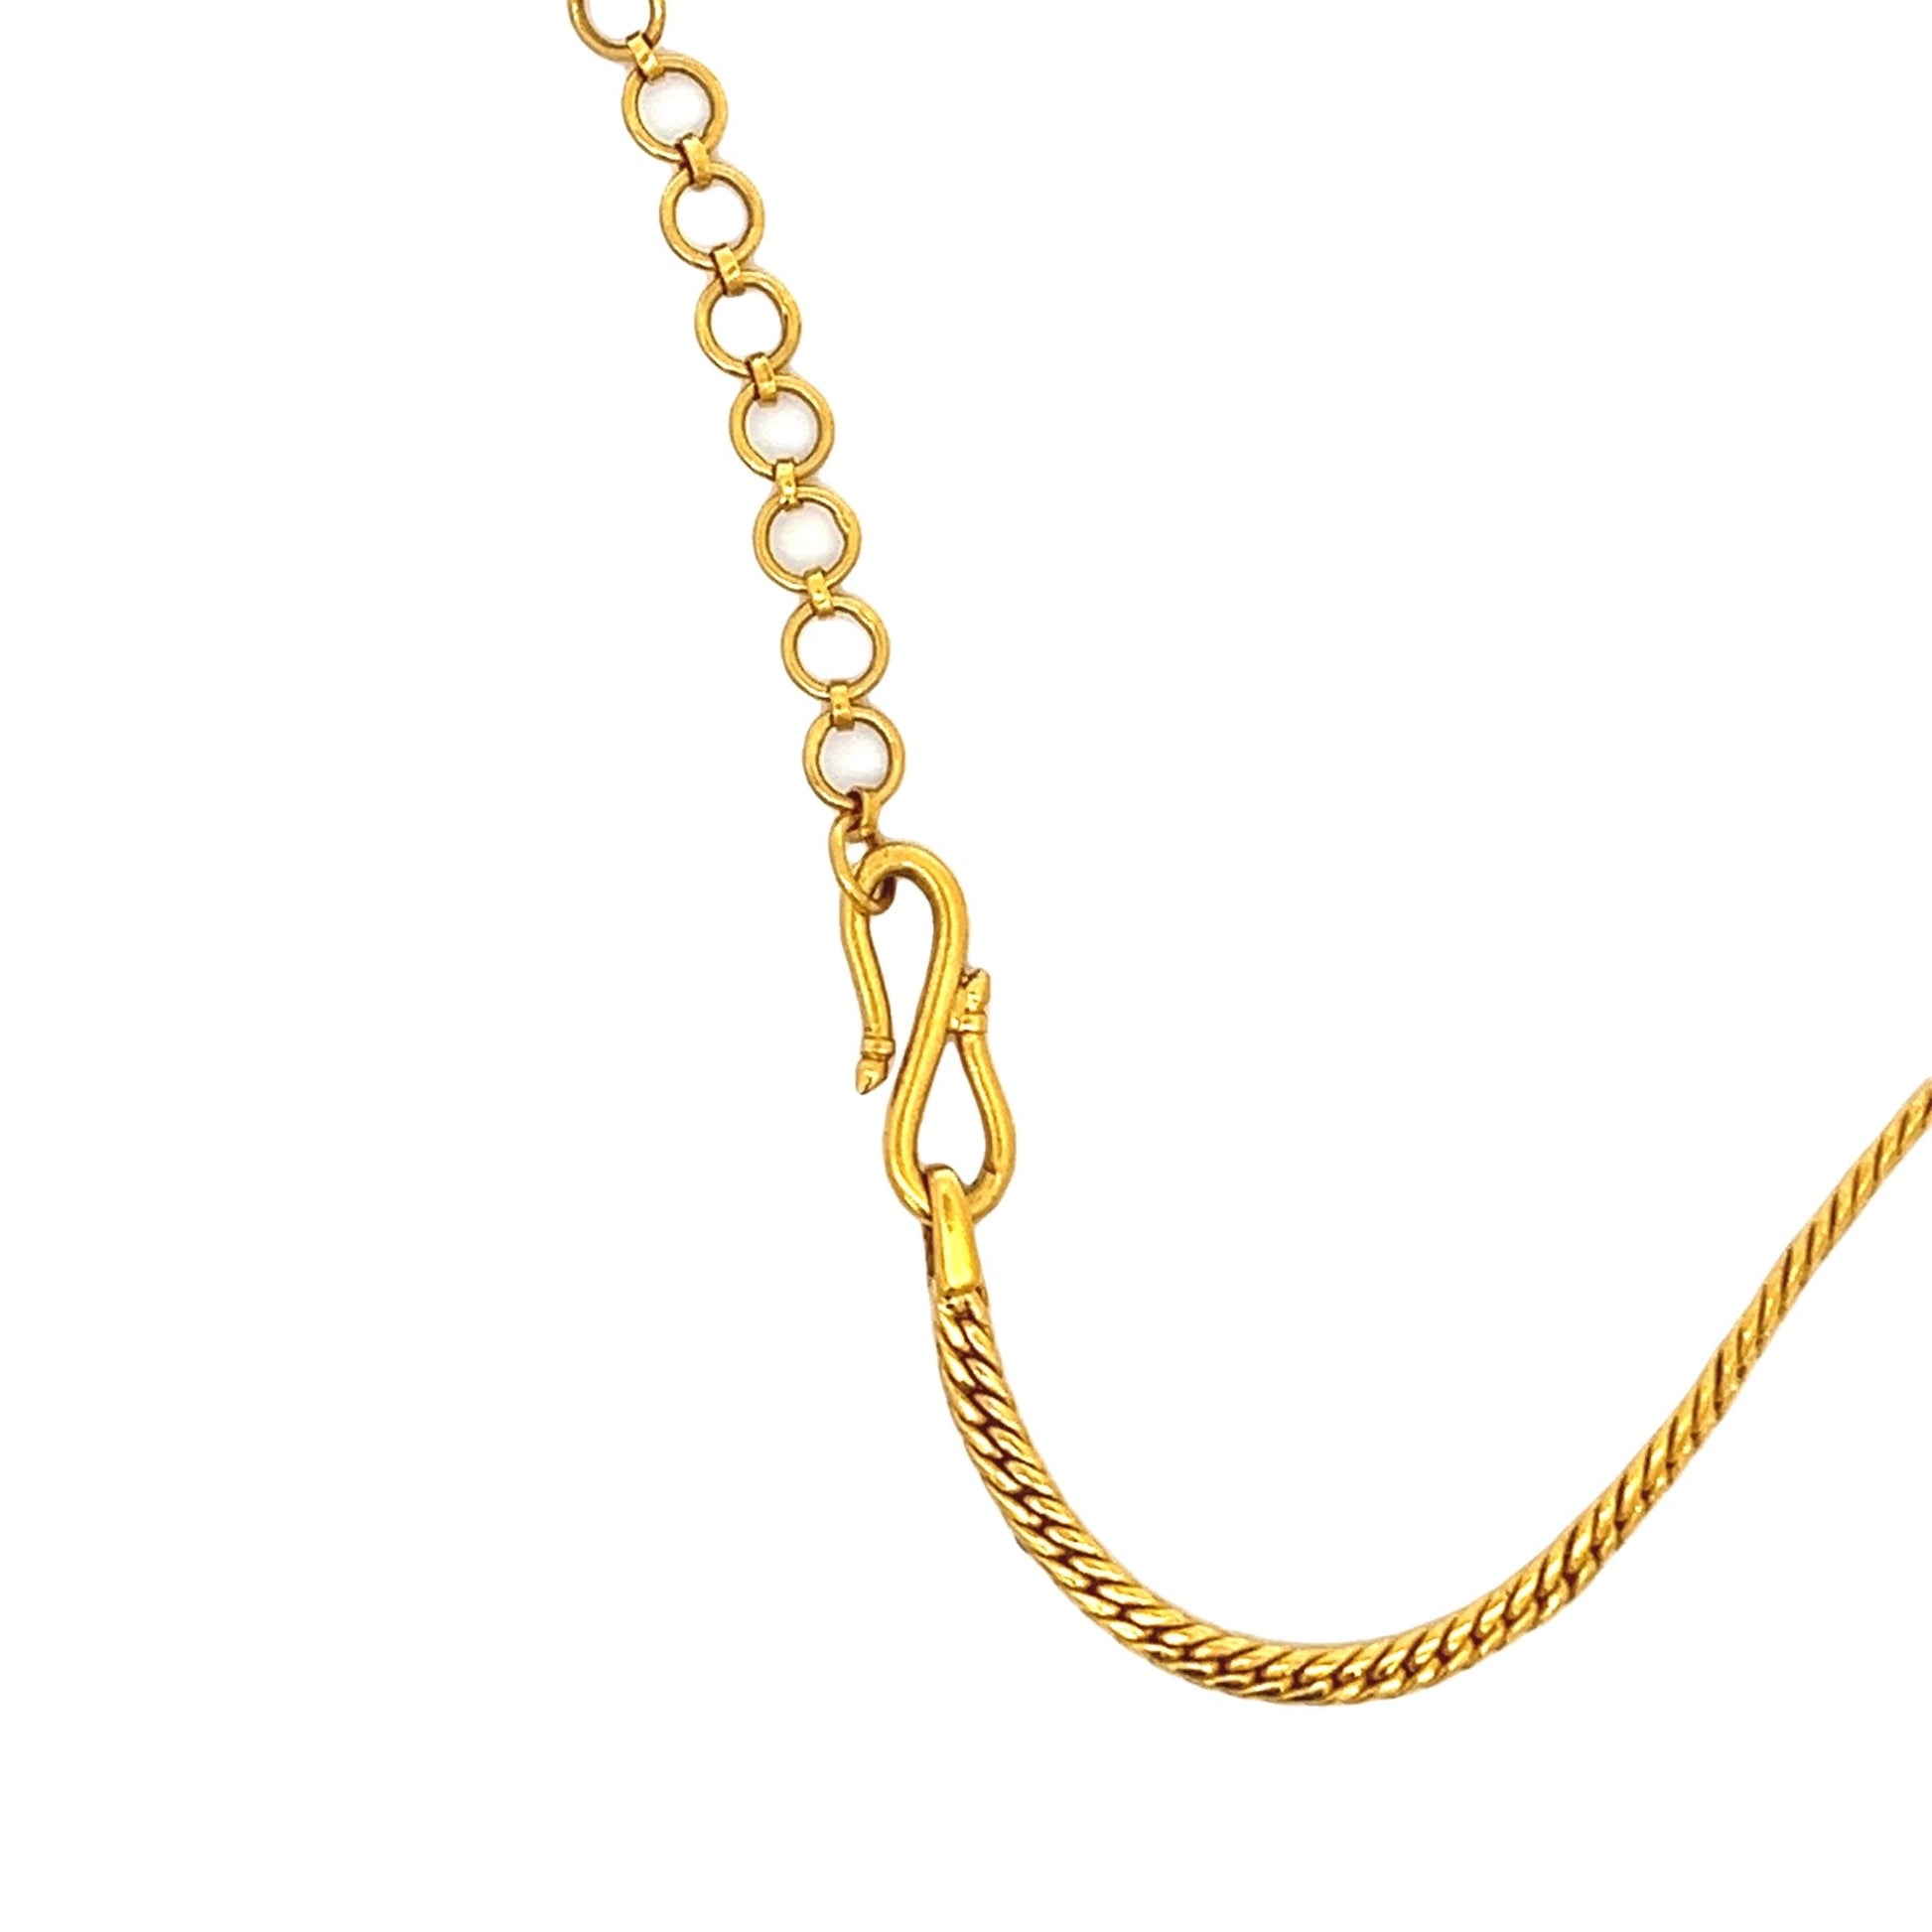 22ct yellow gold elegant necklace 07001332NecklaceRetroGold